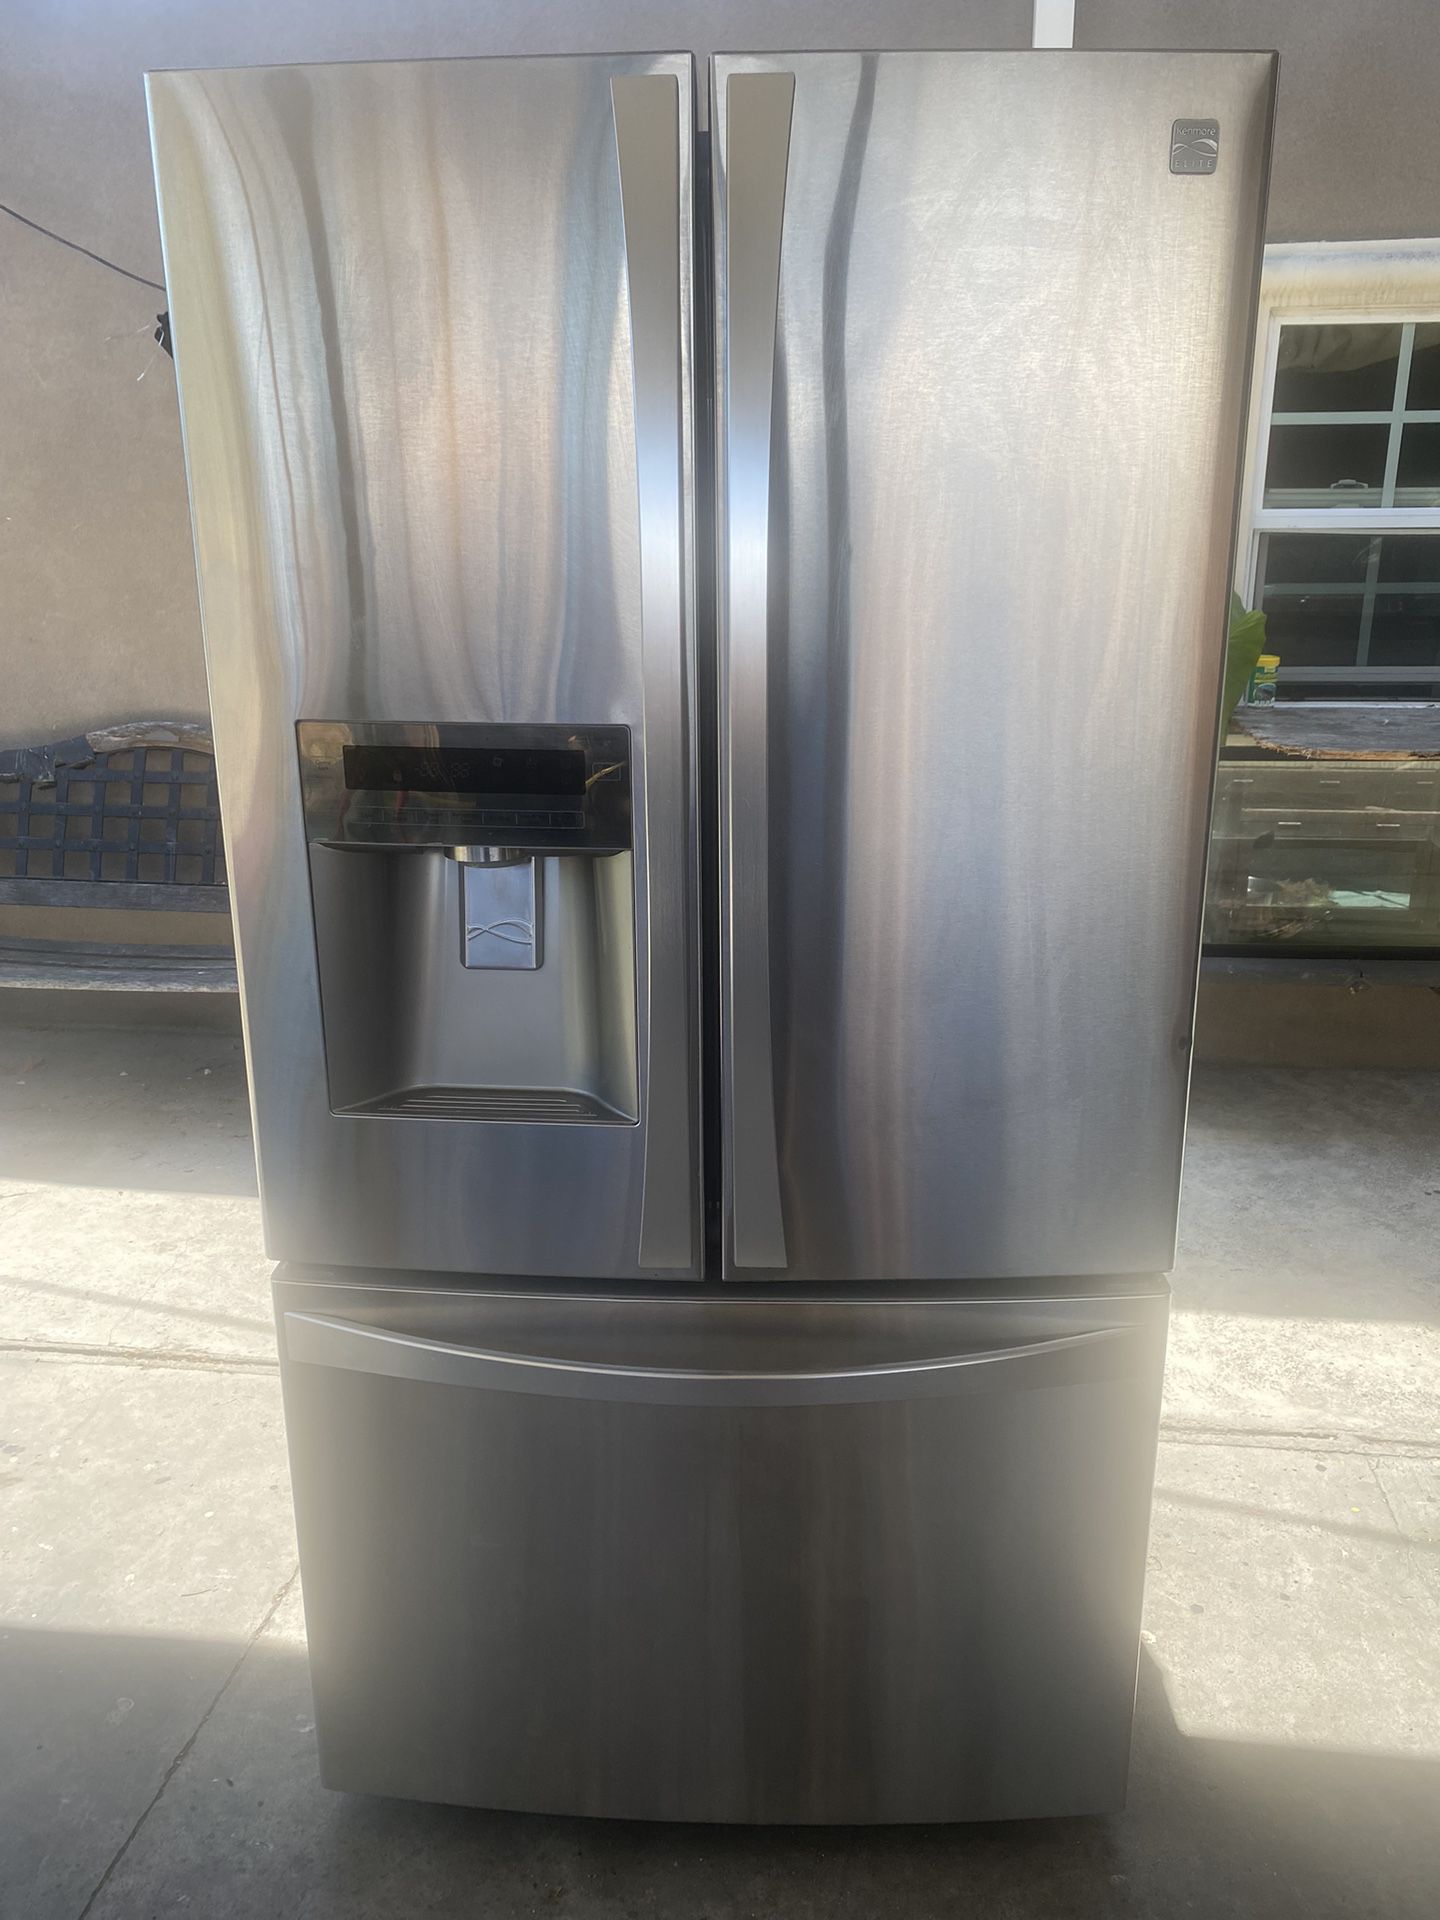 Free Kenmore Refrigerator 